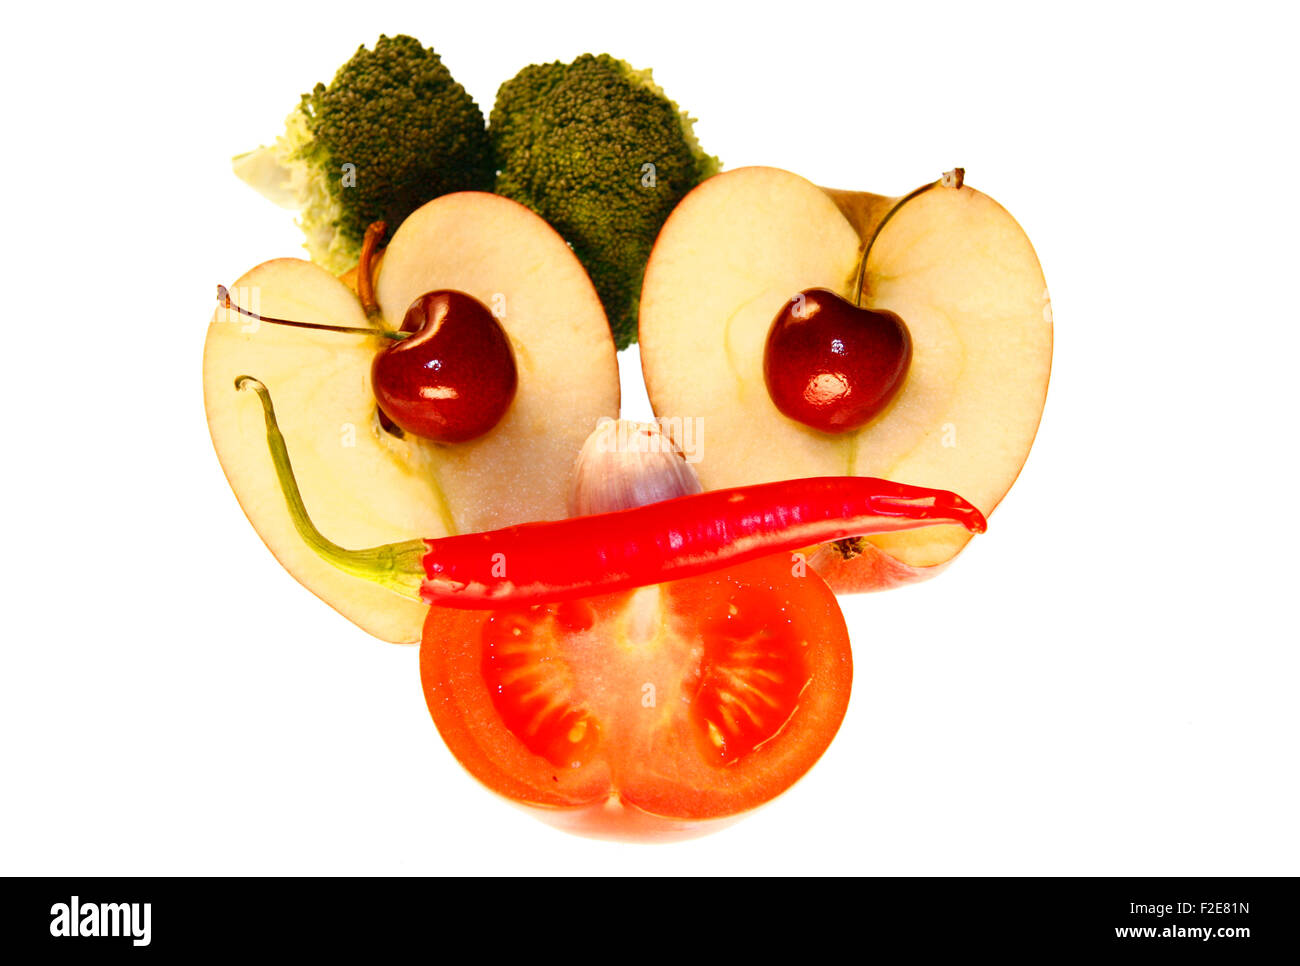 On / Gesicht: Kirschen, Apfel, Tomate, Brokkoli, Chilly - Symbolbild Nahrungsmittel. Stockfoto